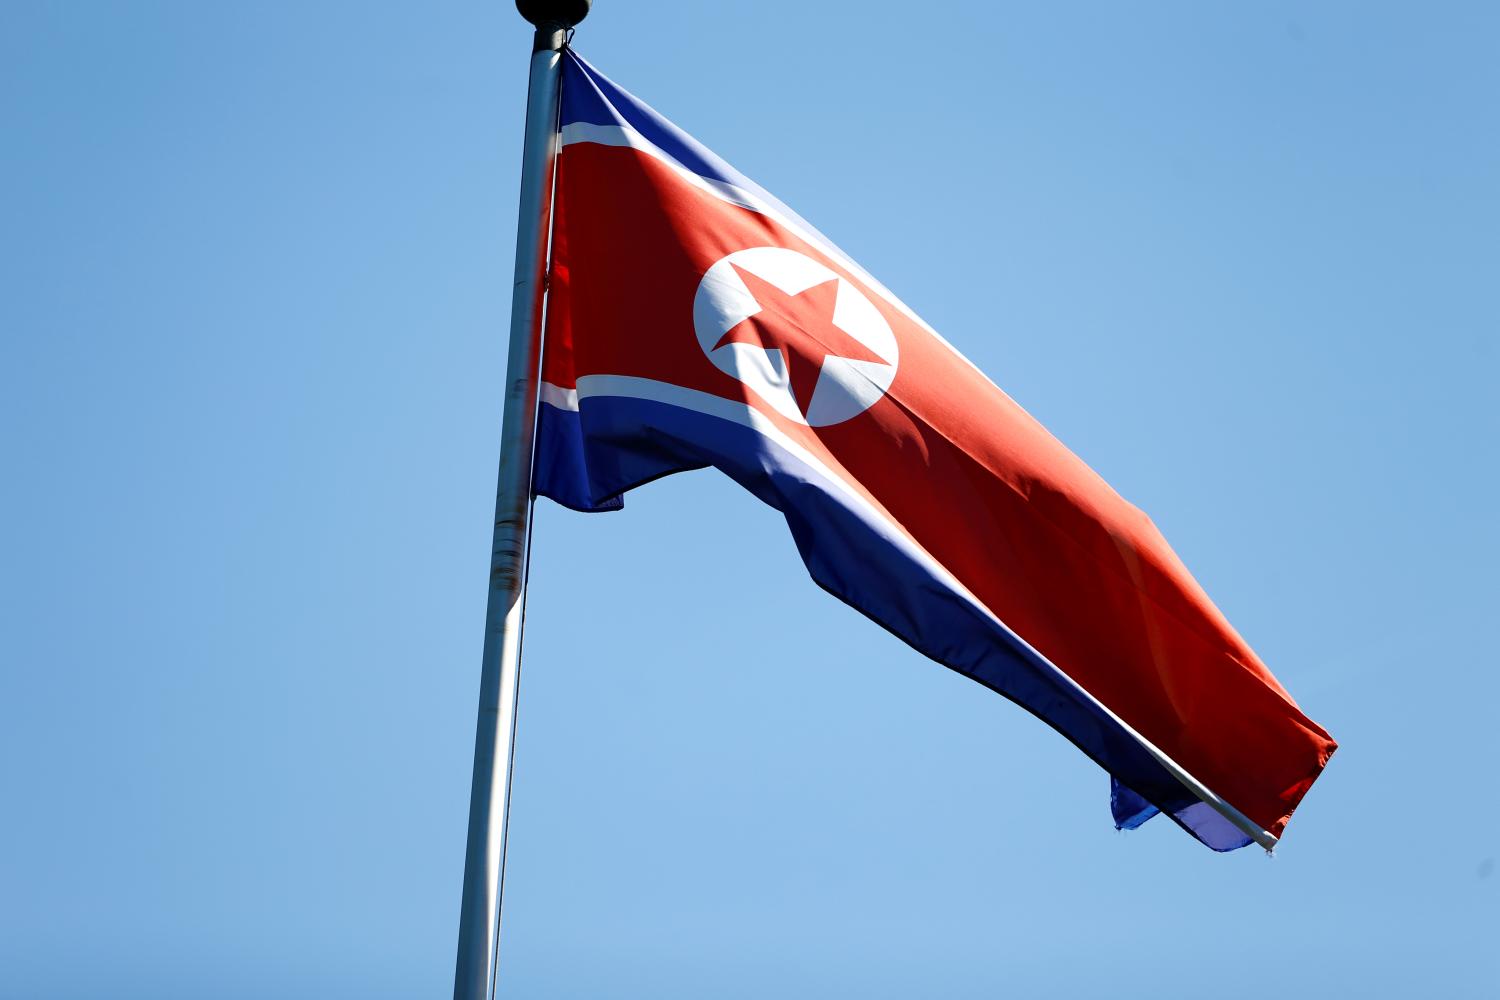 The flag of North Korea is seen in Geneva, Switzerland, June 20, 2017. REUTERS/Pierre Albouy - RC1217F51A80